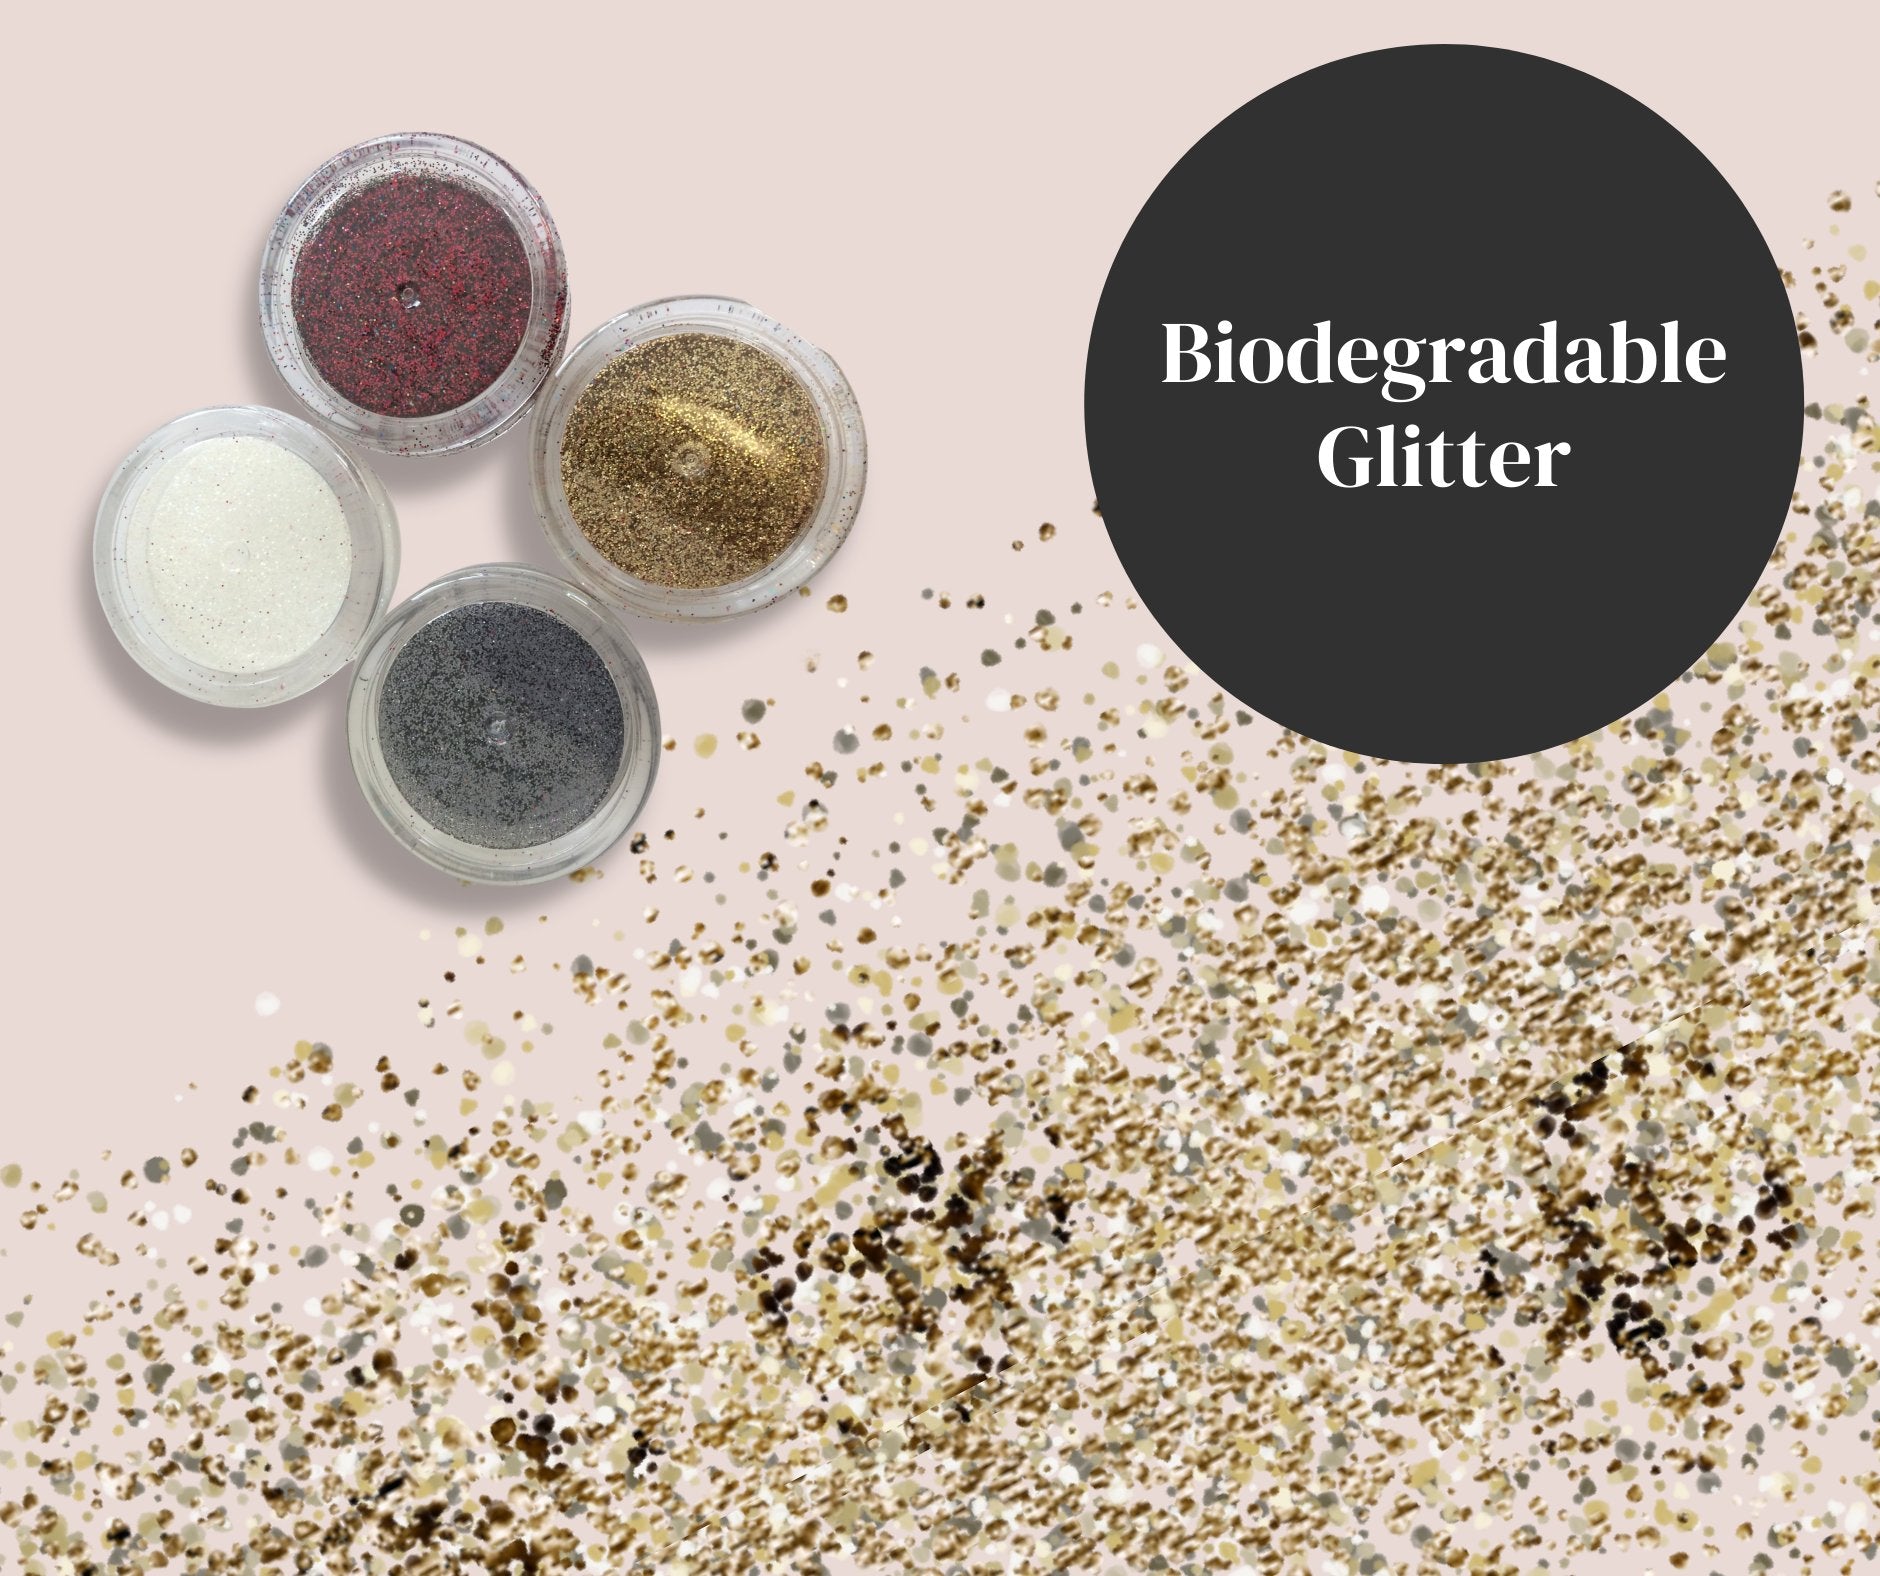 BioDegradable Glitter